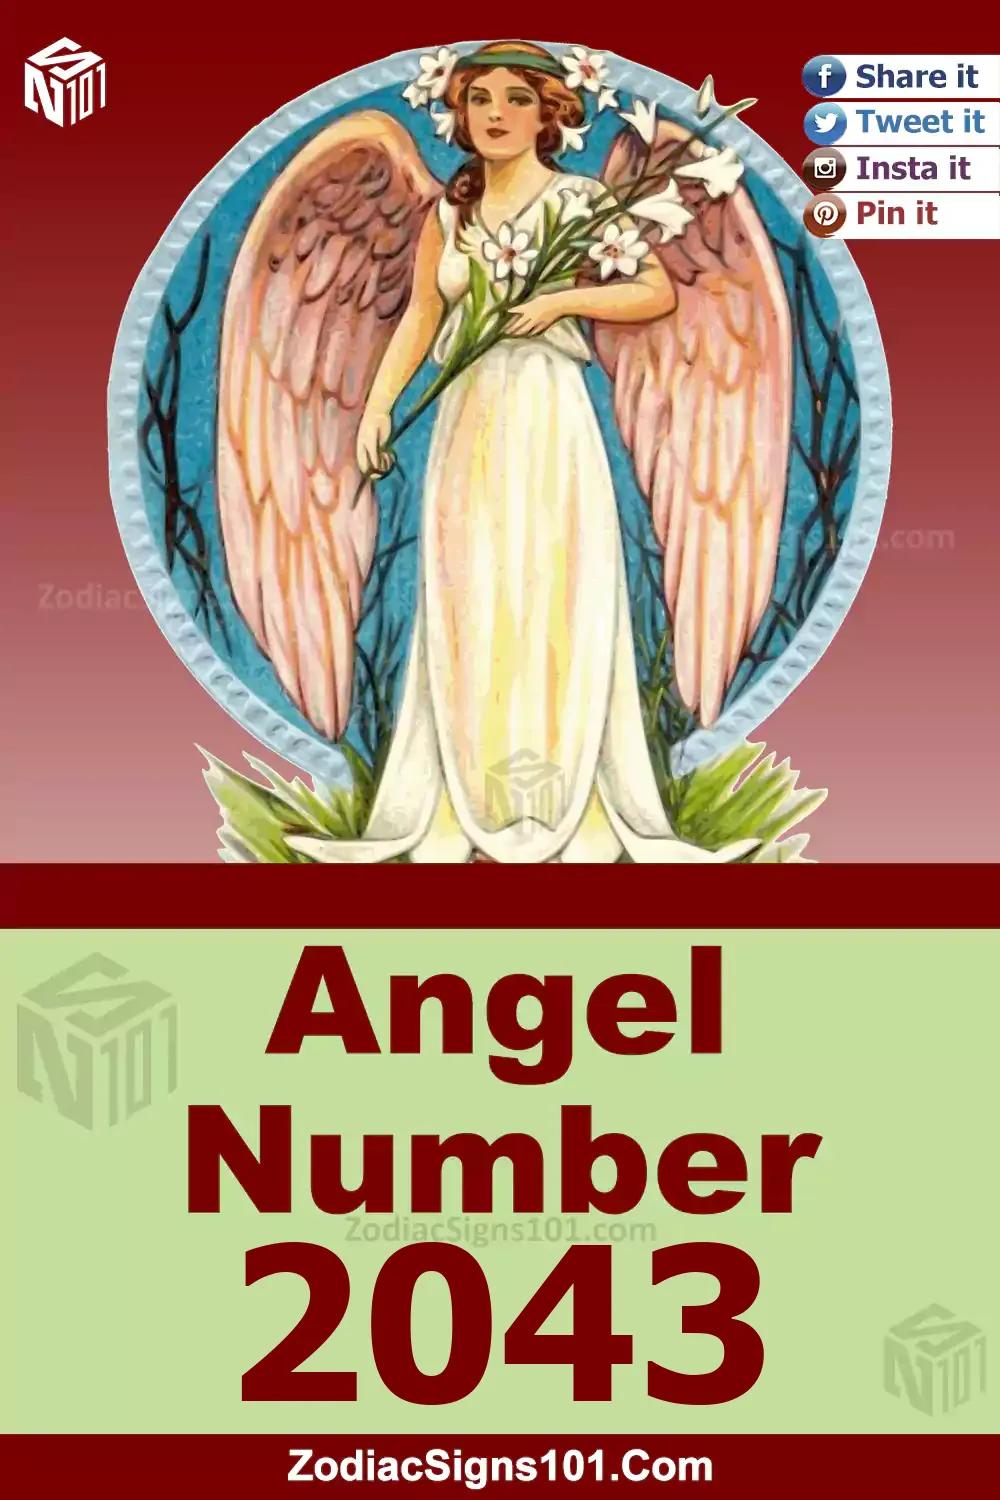 2043-Angel-Number-Meaning.jpg